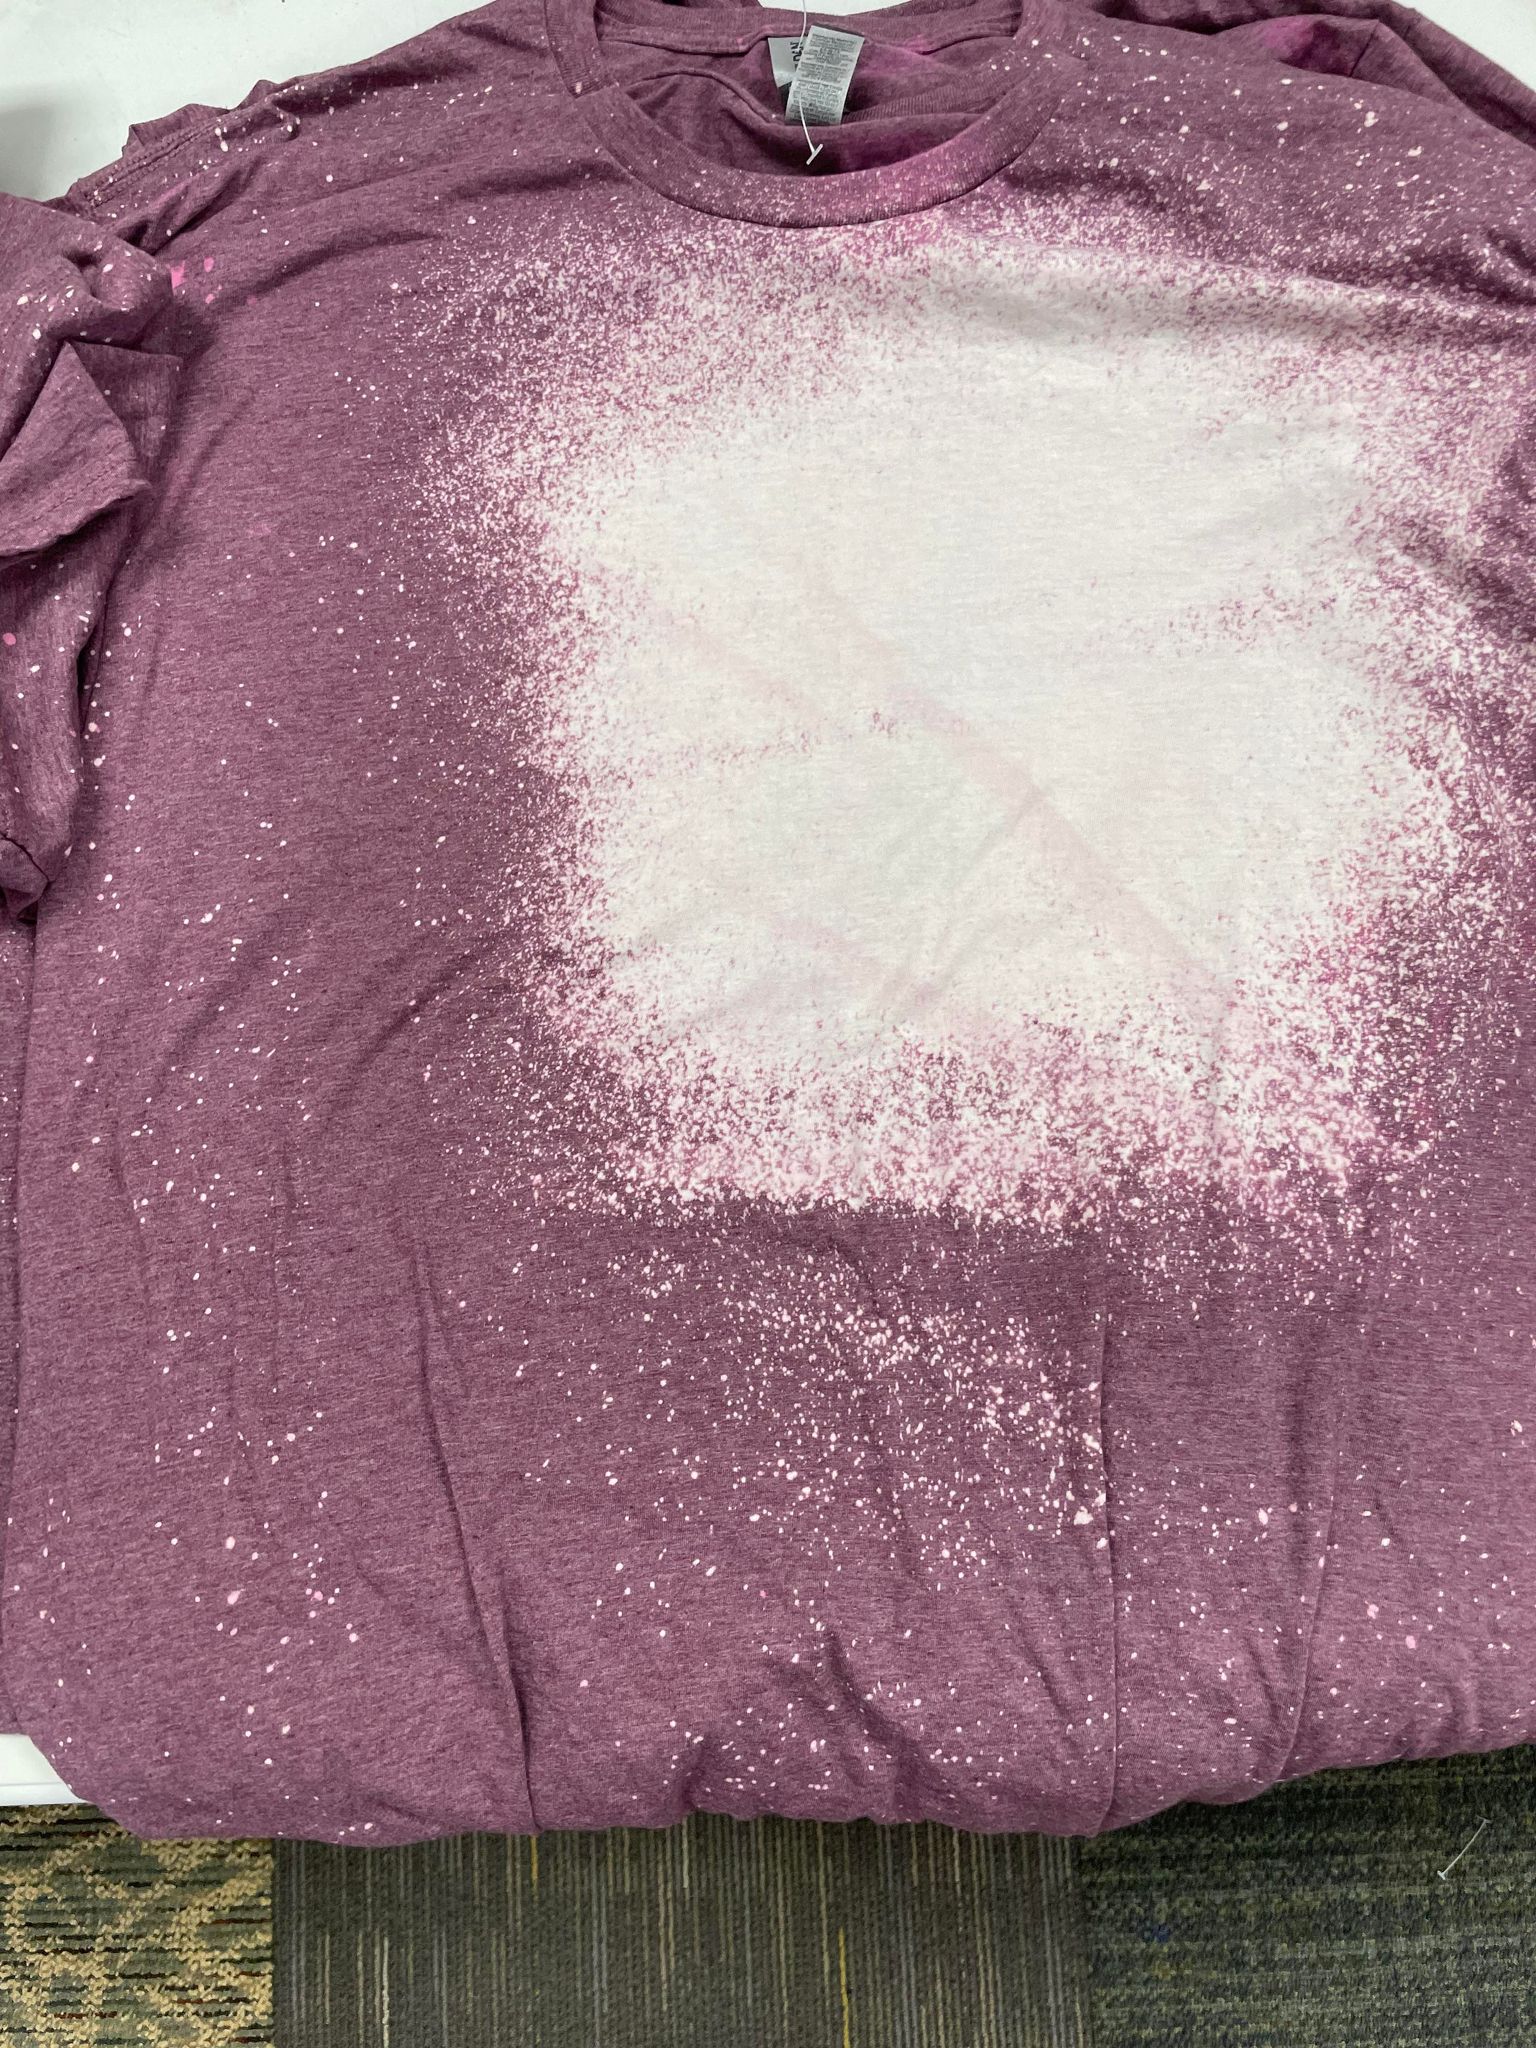 Gildan Dry Blend Tshirt 64000 - Bleached Heather Maroon